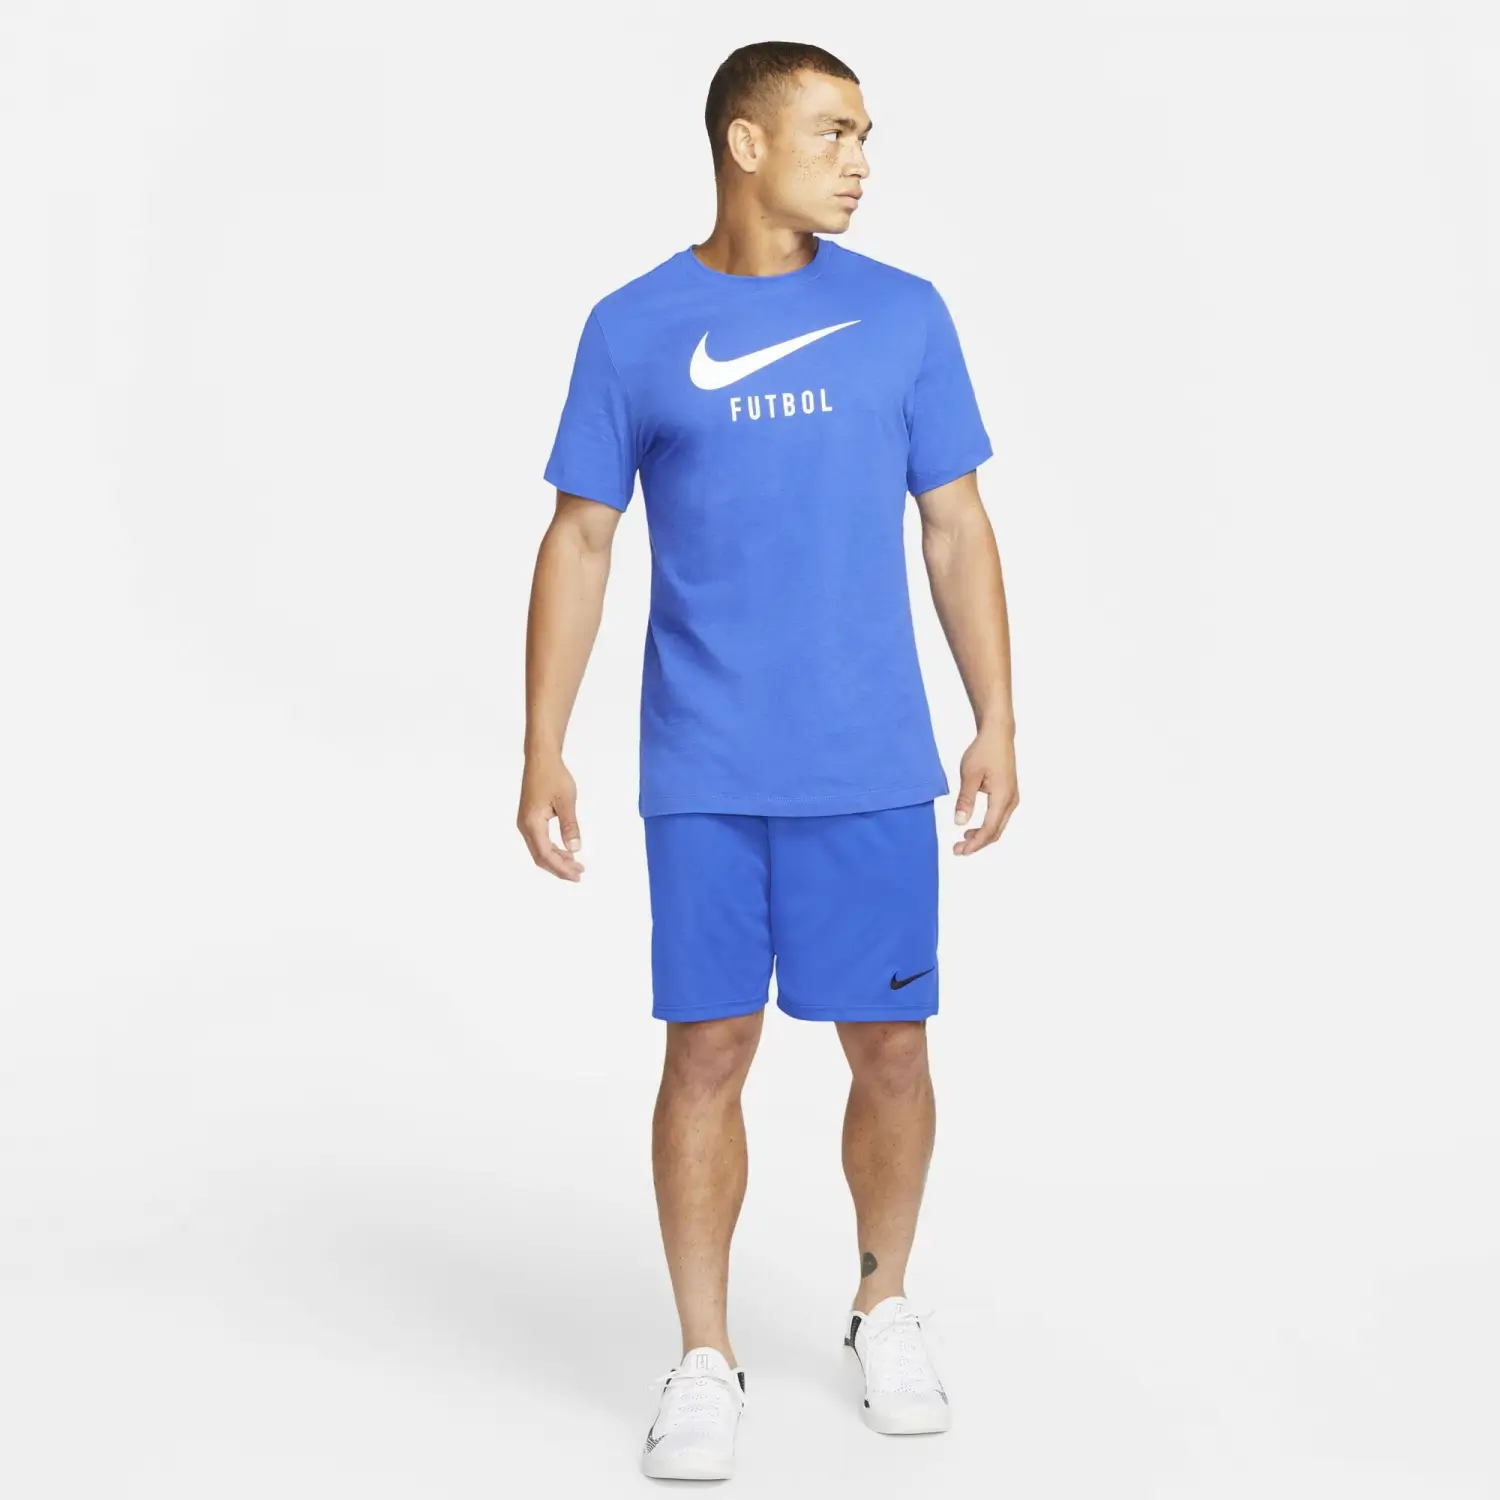 Nike Swoosh Football Mavi Erkek Tişört - DH3890-480